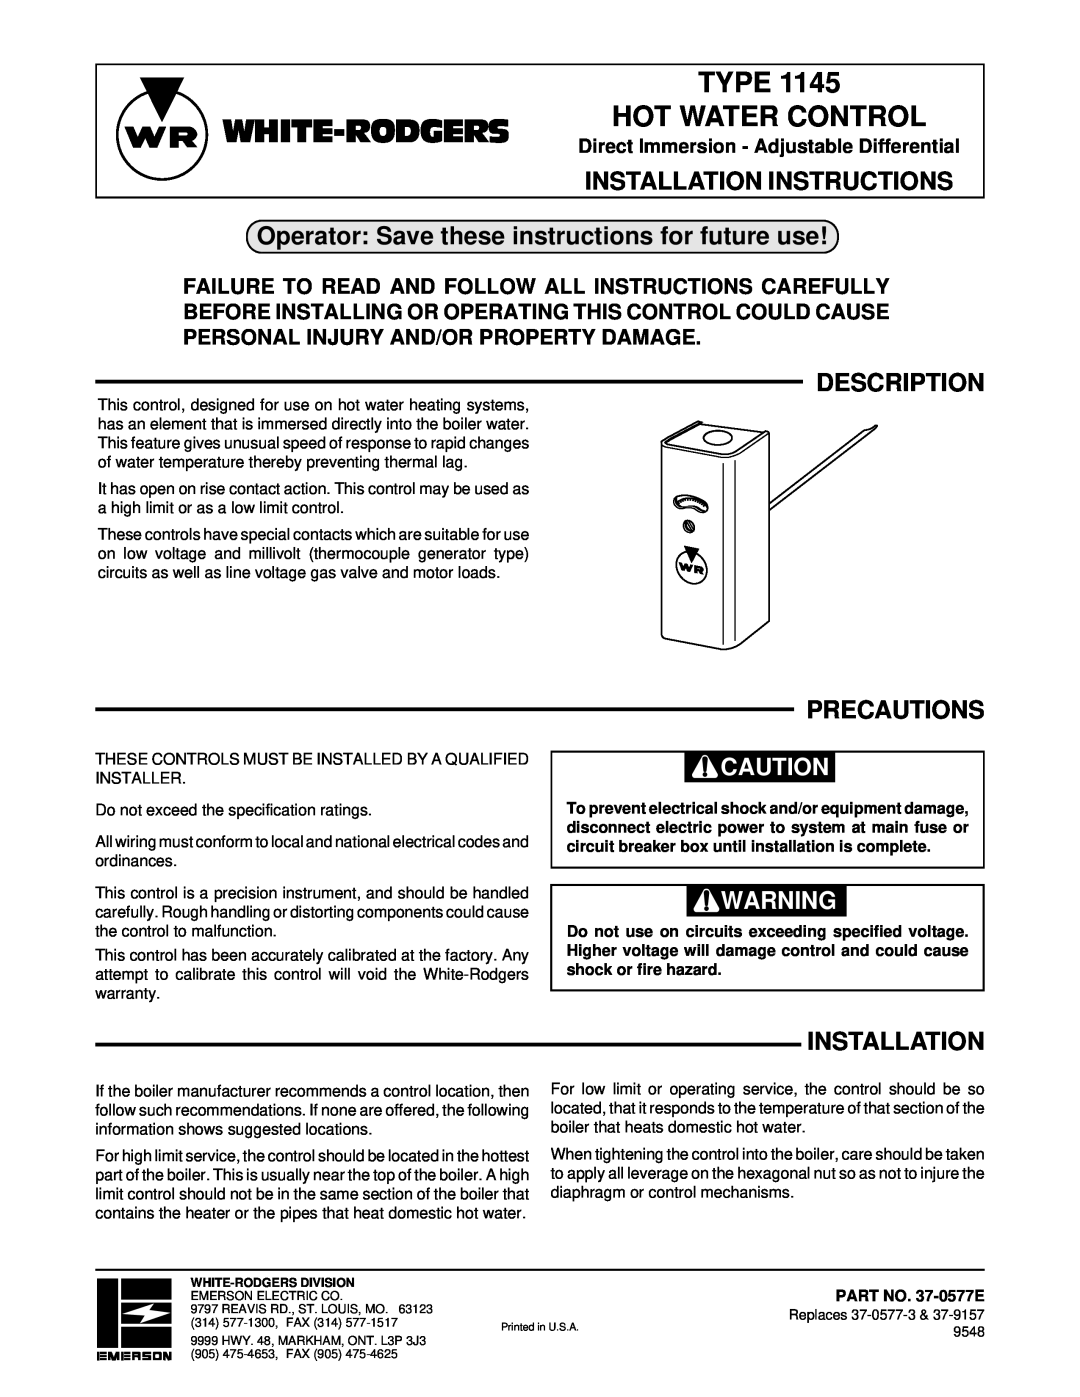 White Rodgers 1145 installation instructions White-Rodgers, Type Hot Water Control, Installation Instructions, Description 